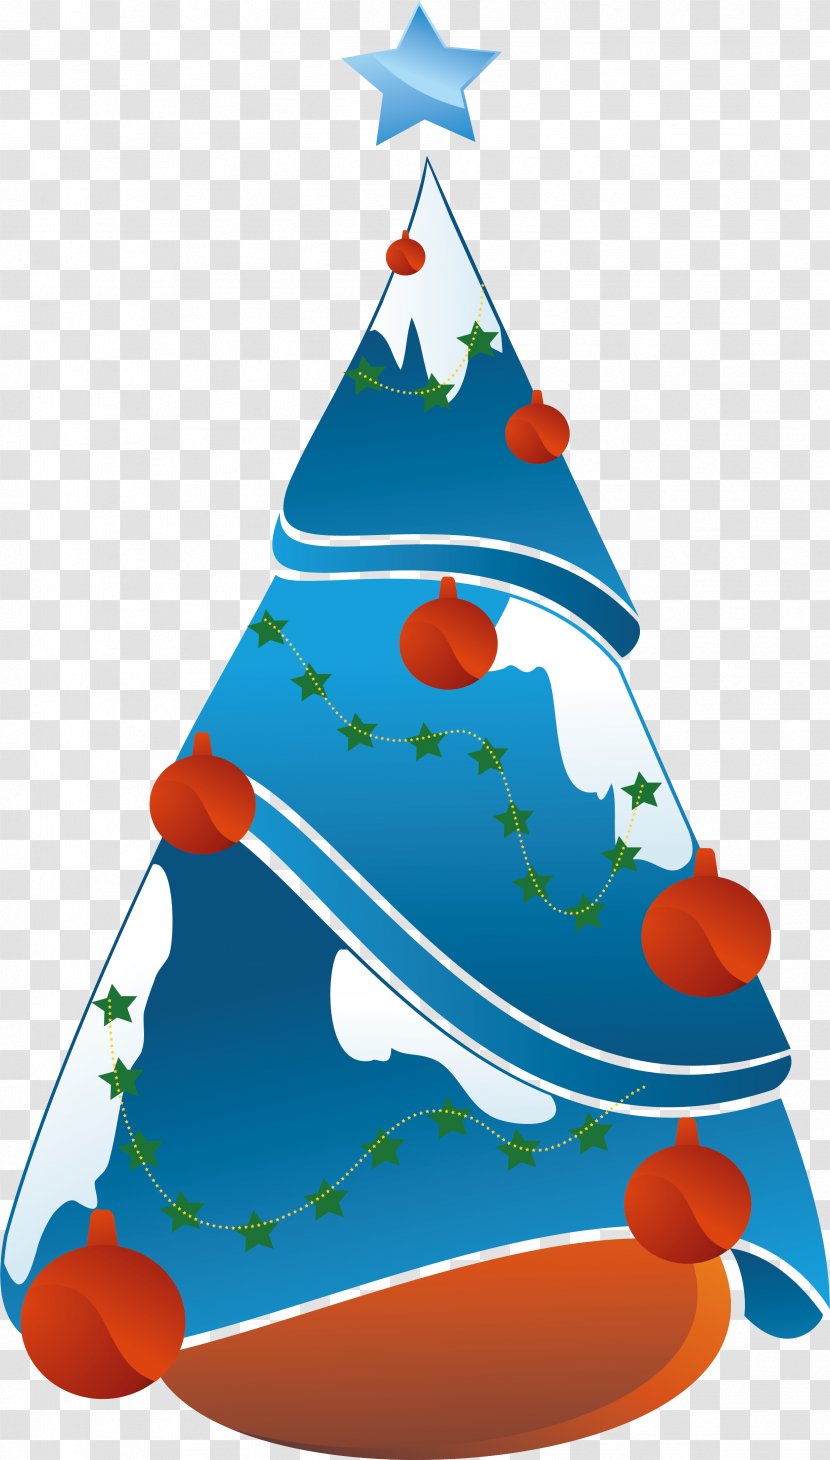 Santa Claus Christmas Tree Clip Art - Holiday Ornament - Exquisite Design Transparent PNG